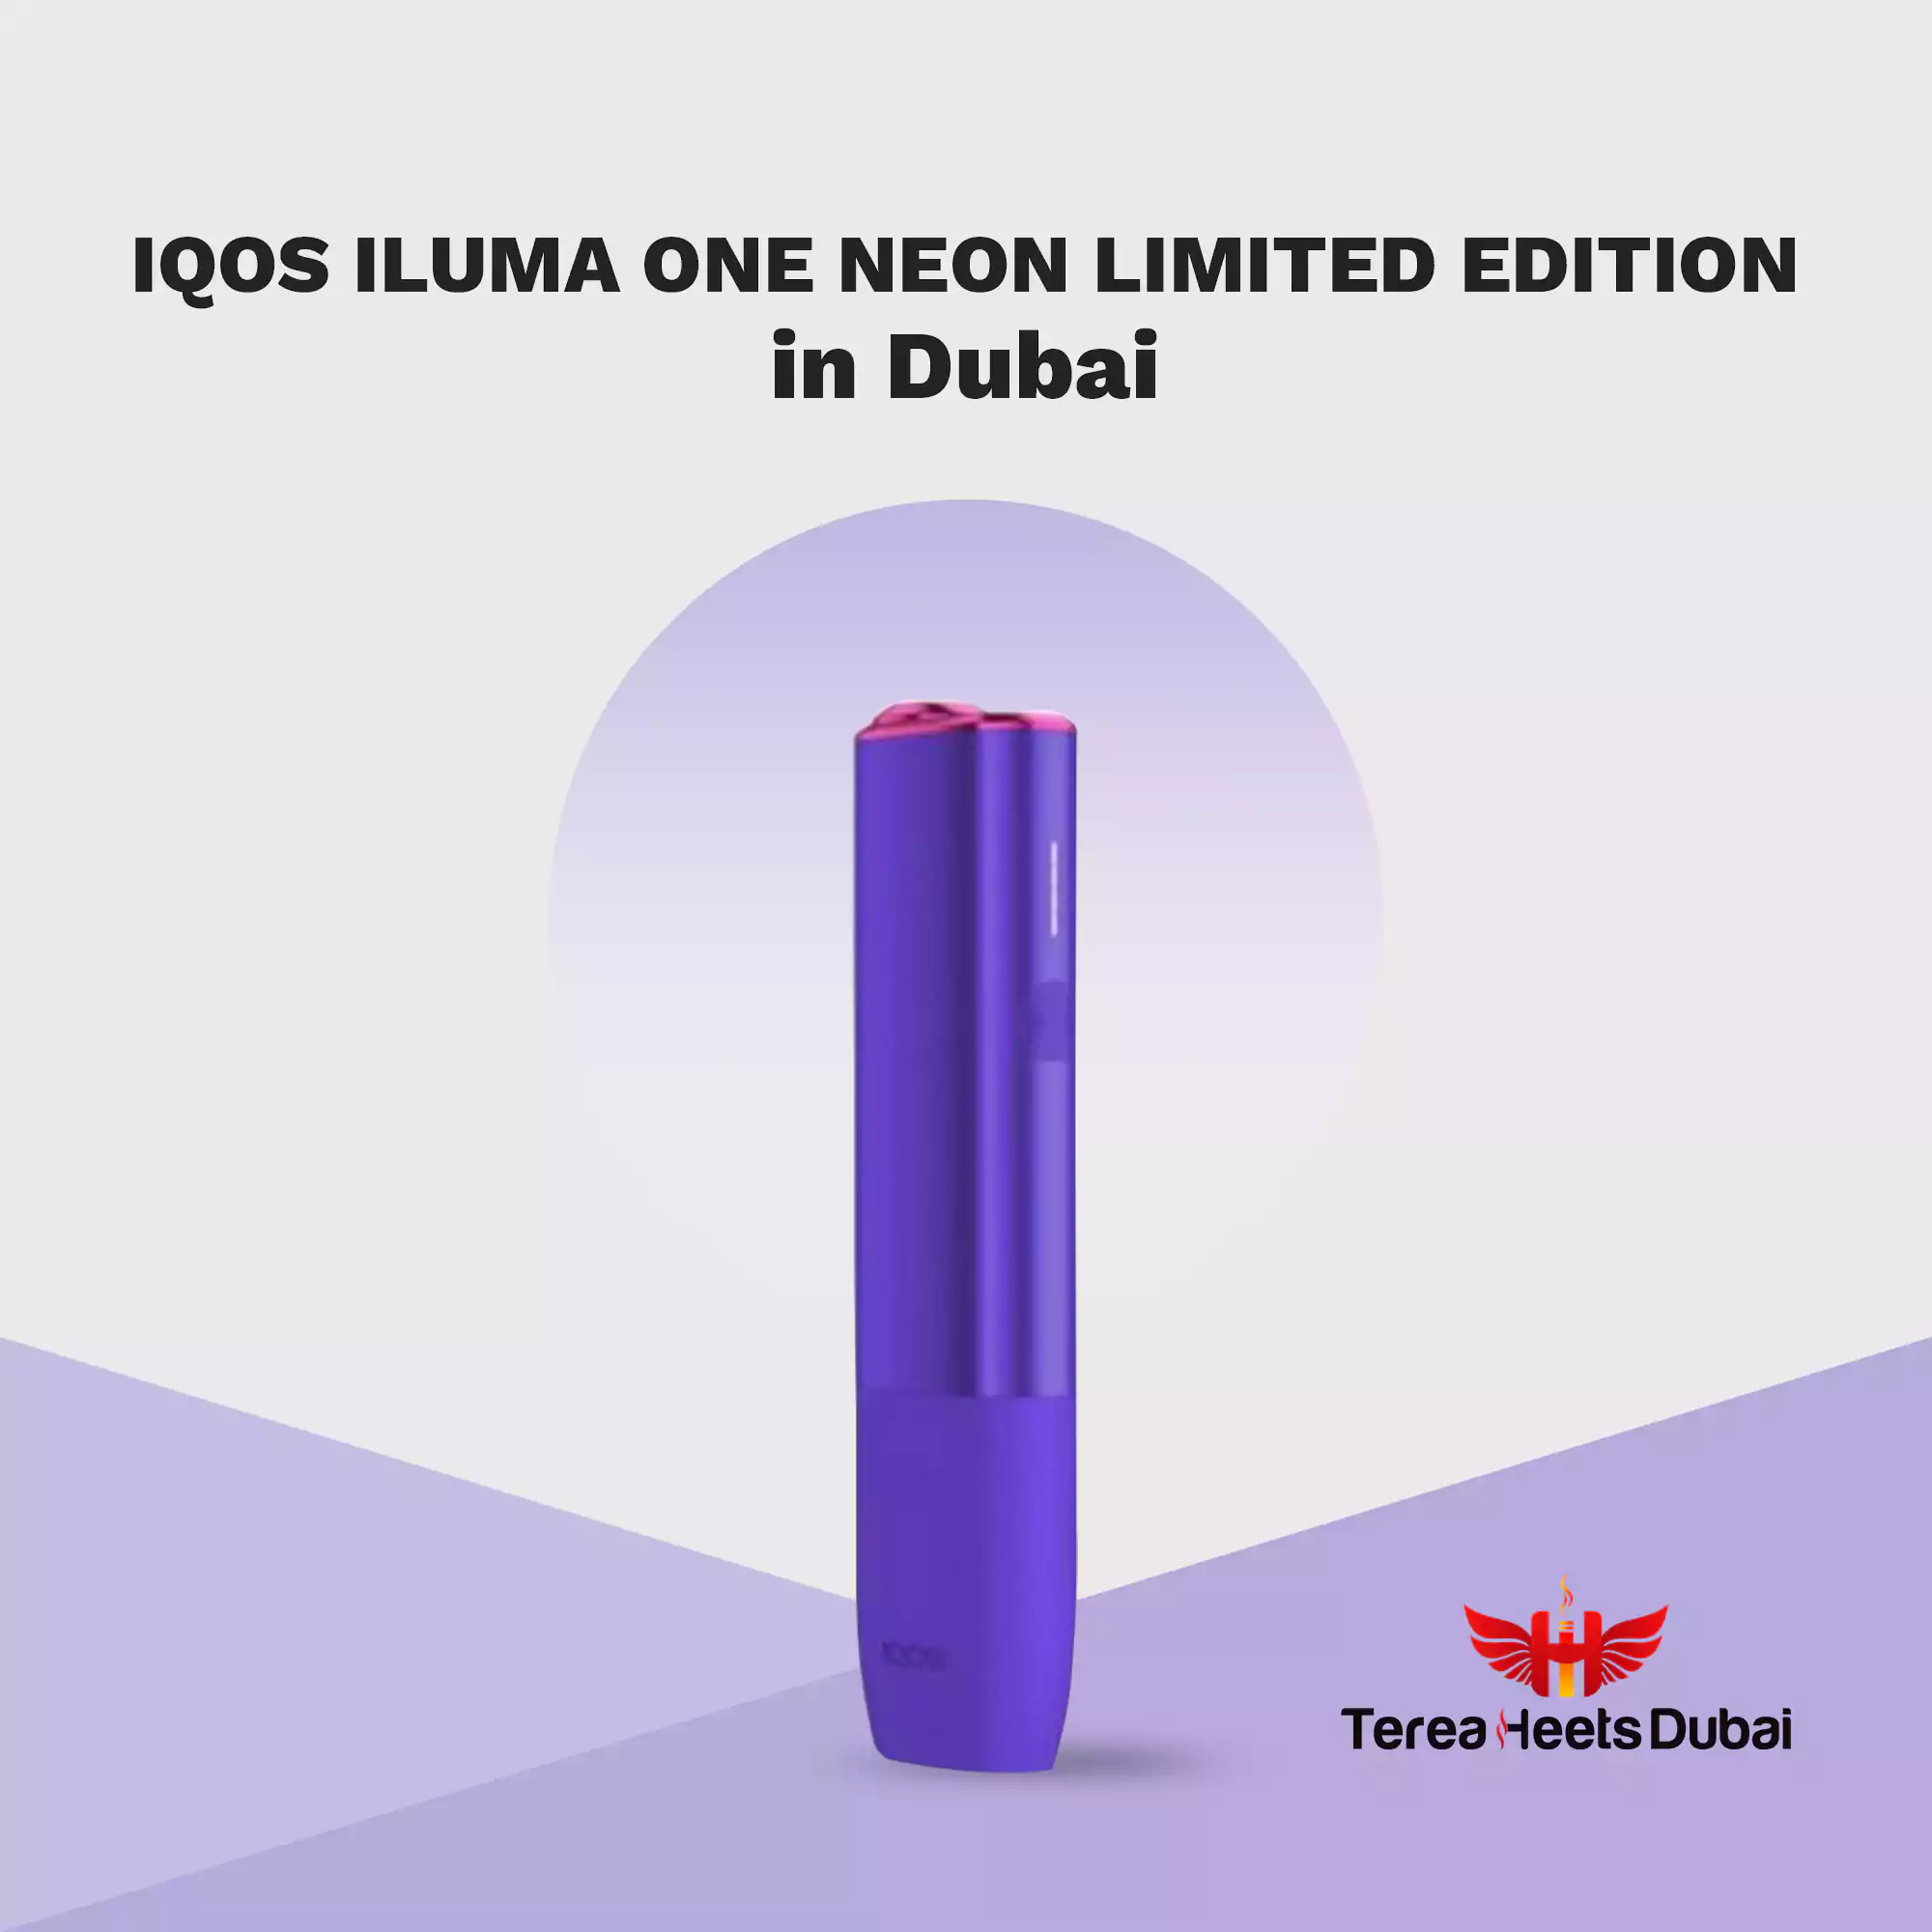 Iqos Iluma One Neon Limited Edition in Dubai